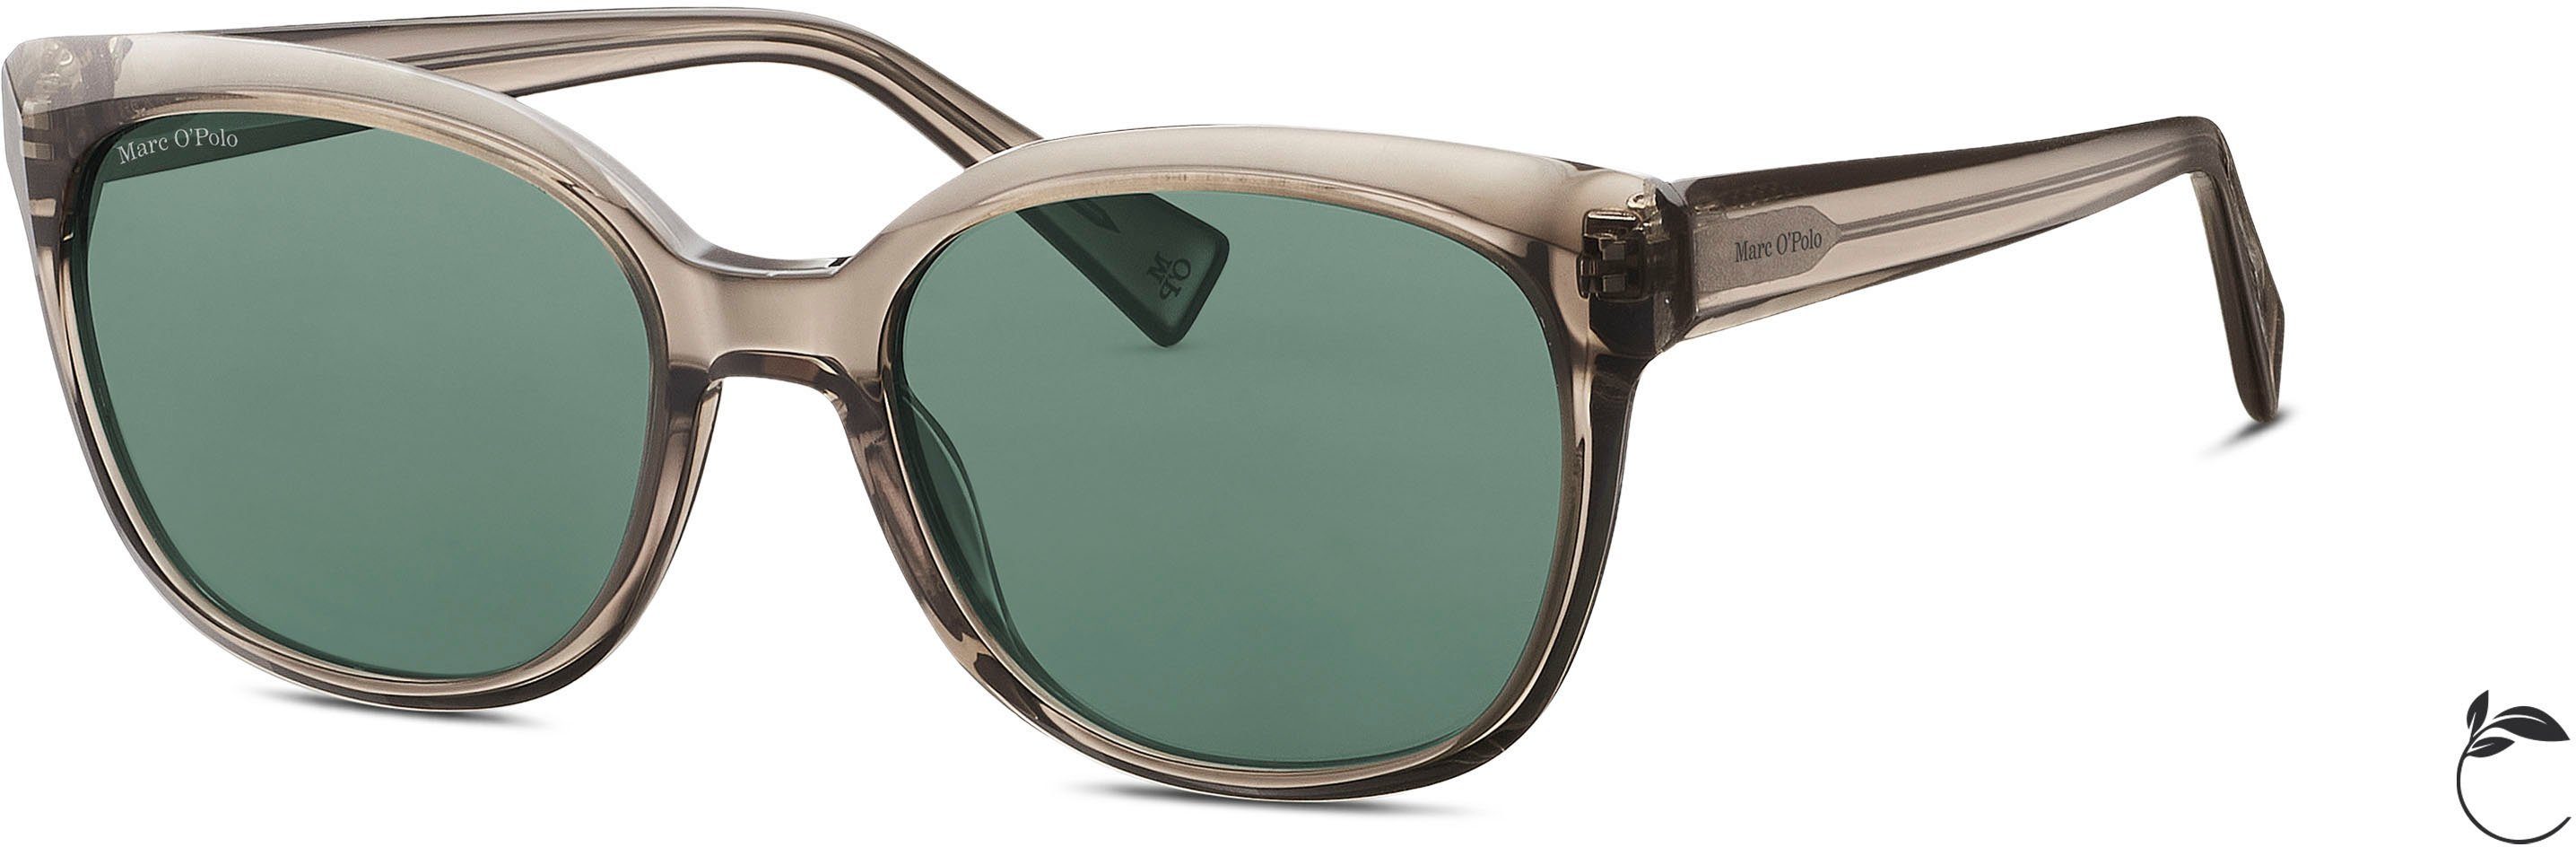 O\'Polo Modell Karree-Form Marc 506196 Sonnenbrille